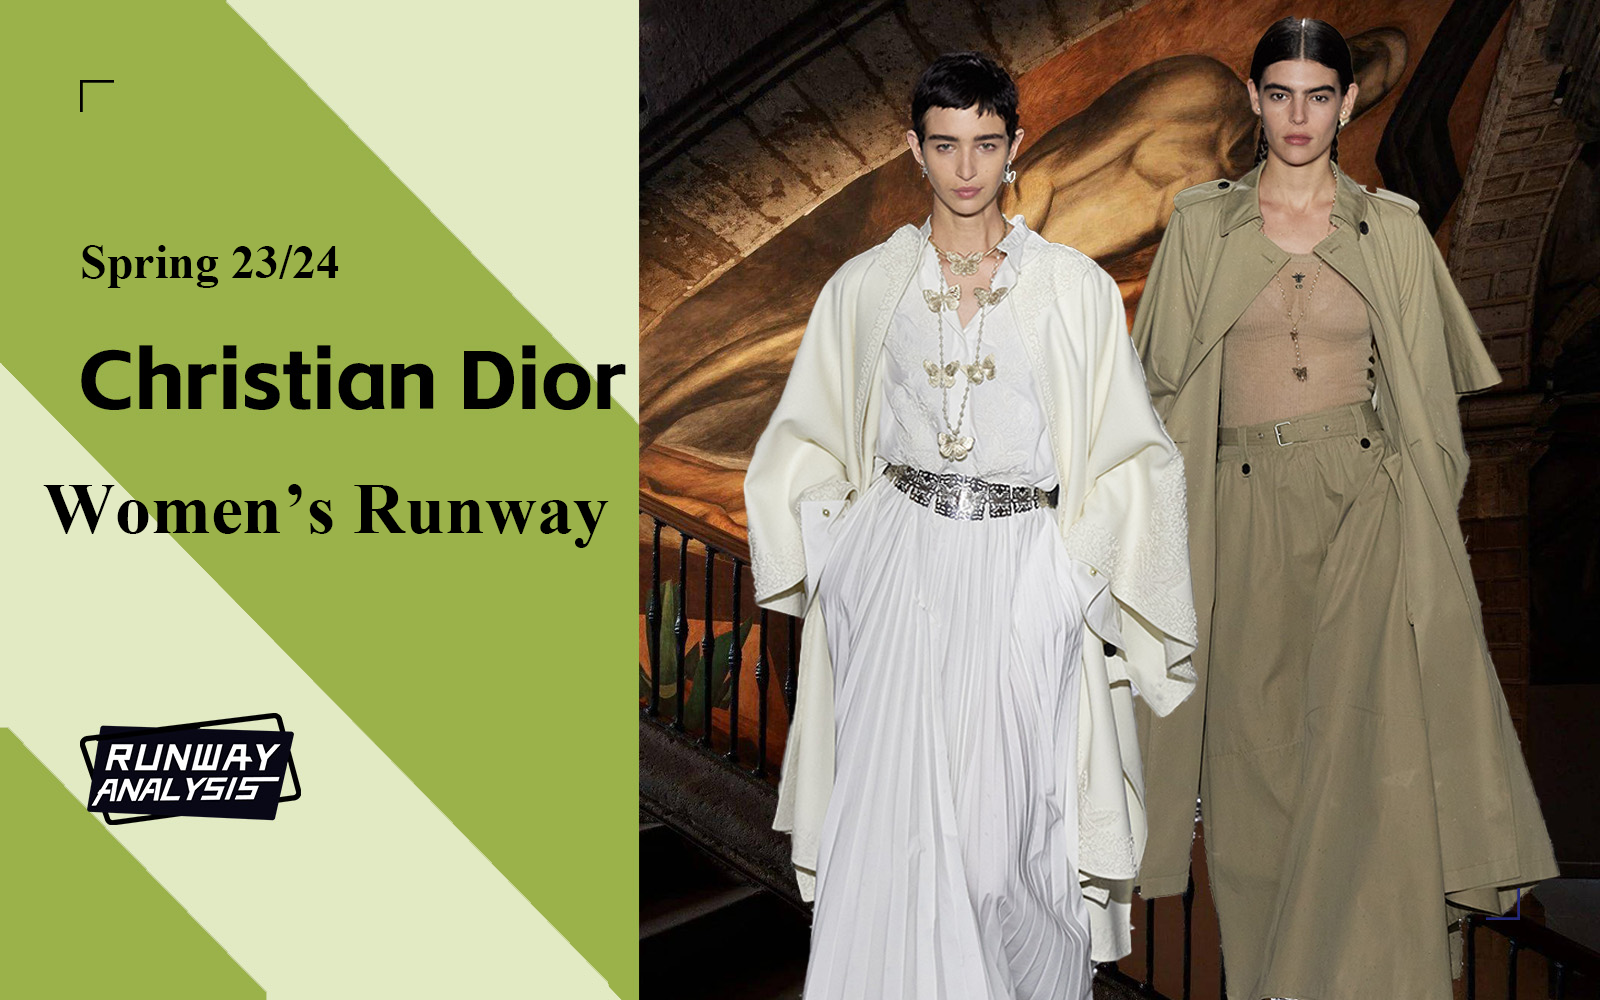 The Womenswear Analysis of Christian Dior